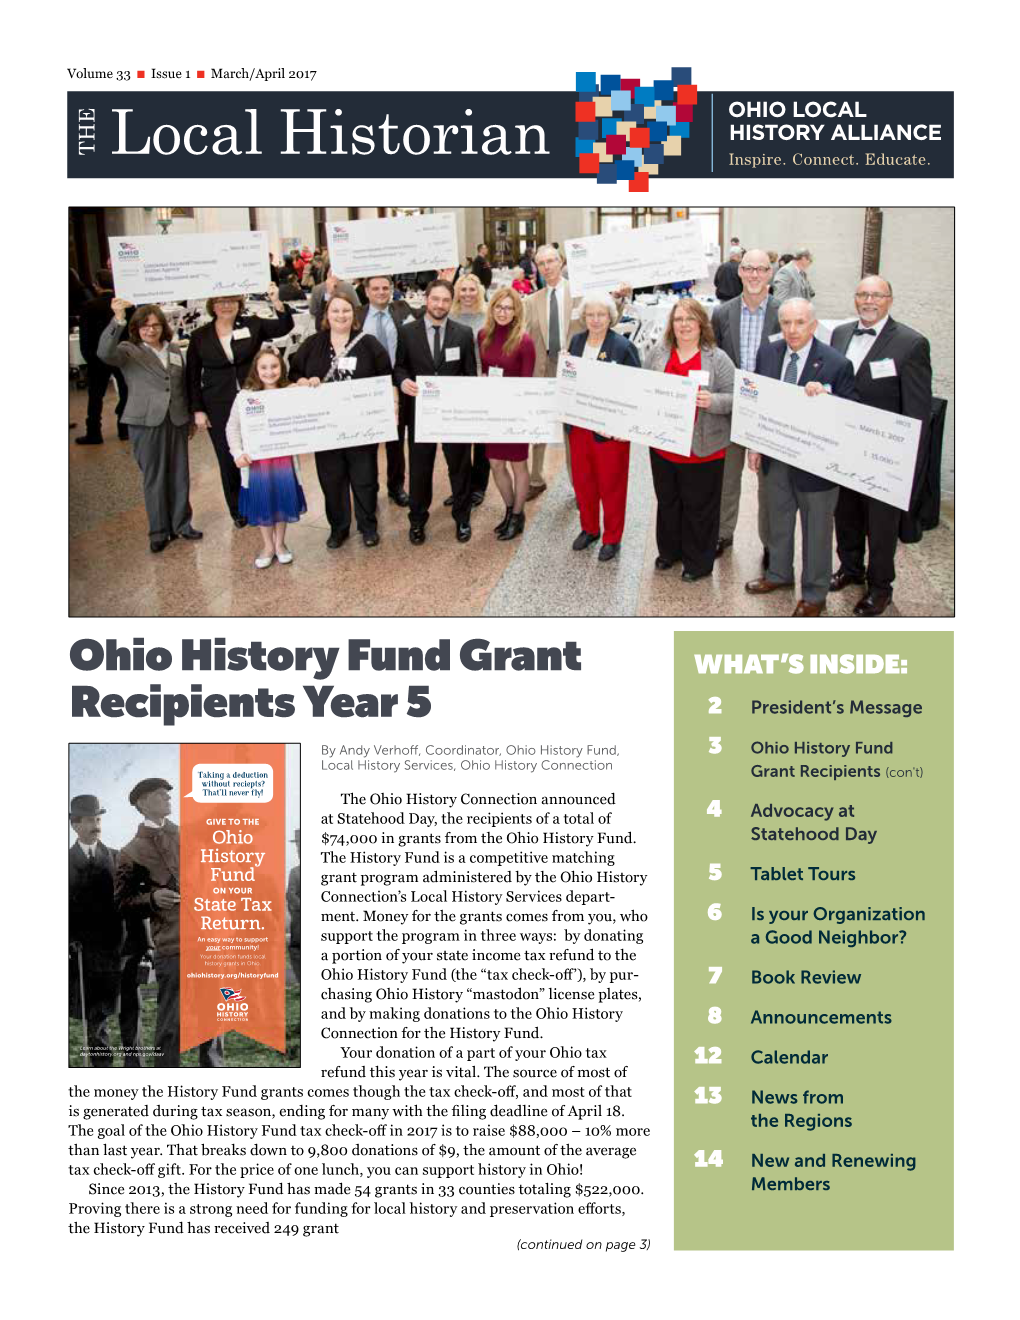 Ohio History Fund Grant Recipients Year 5